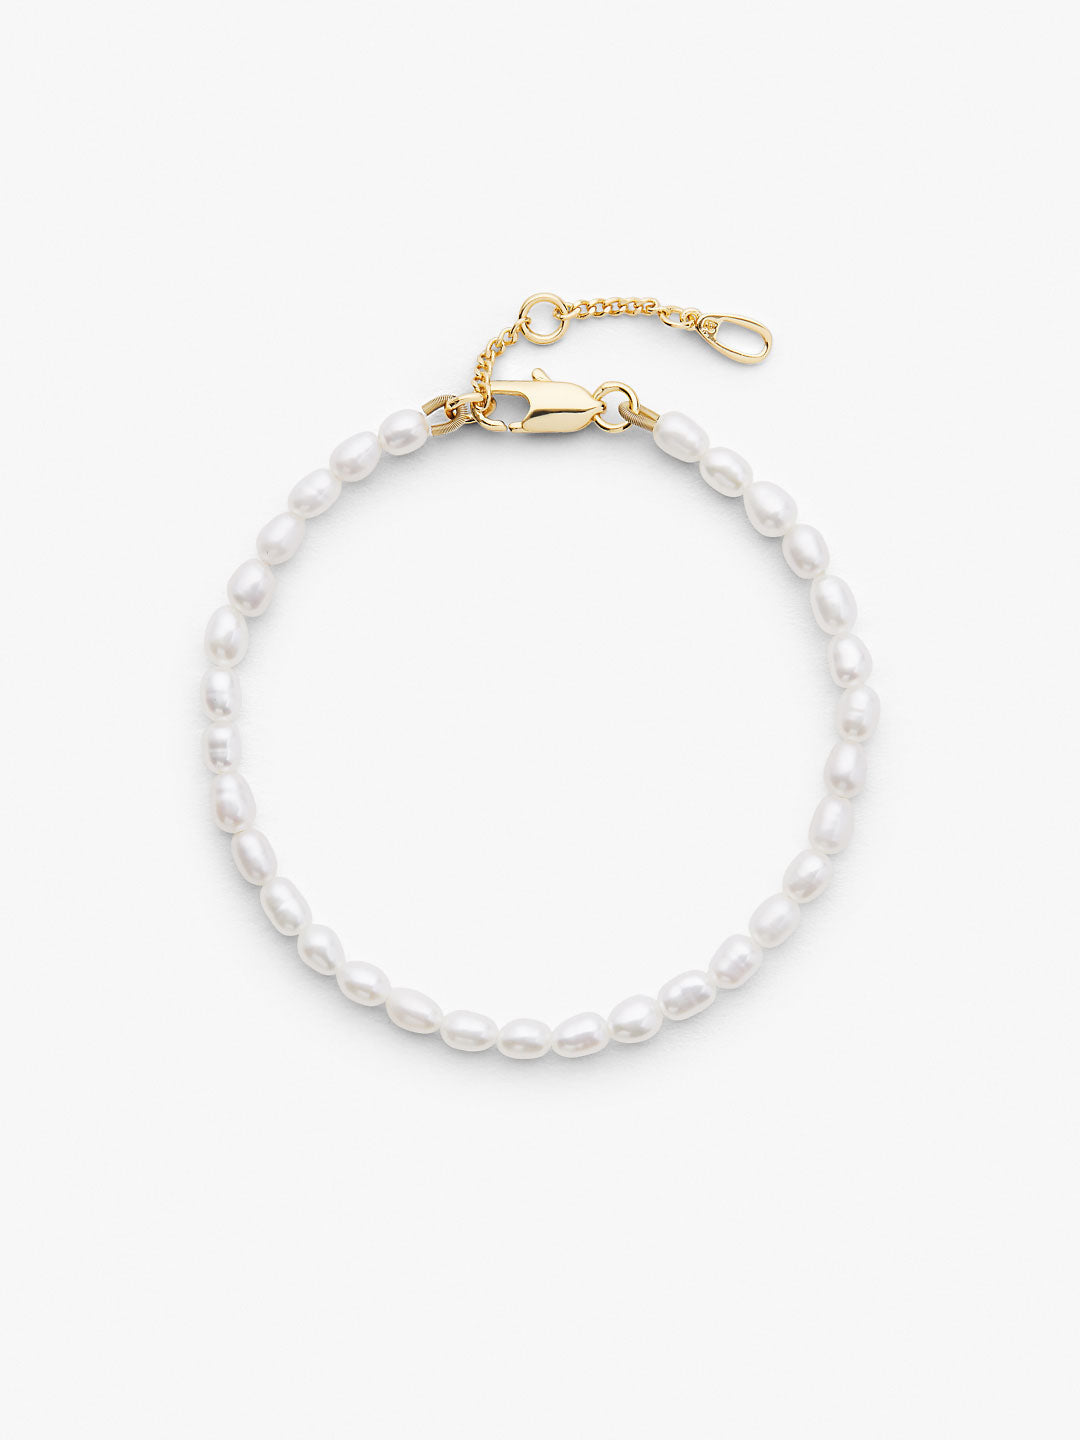 Ana Luisa Jewelry Bracelets Medium Chains Pearl Bracelet Kendall Gold